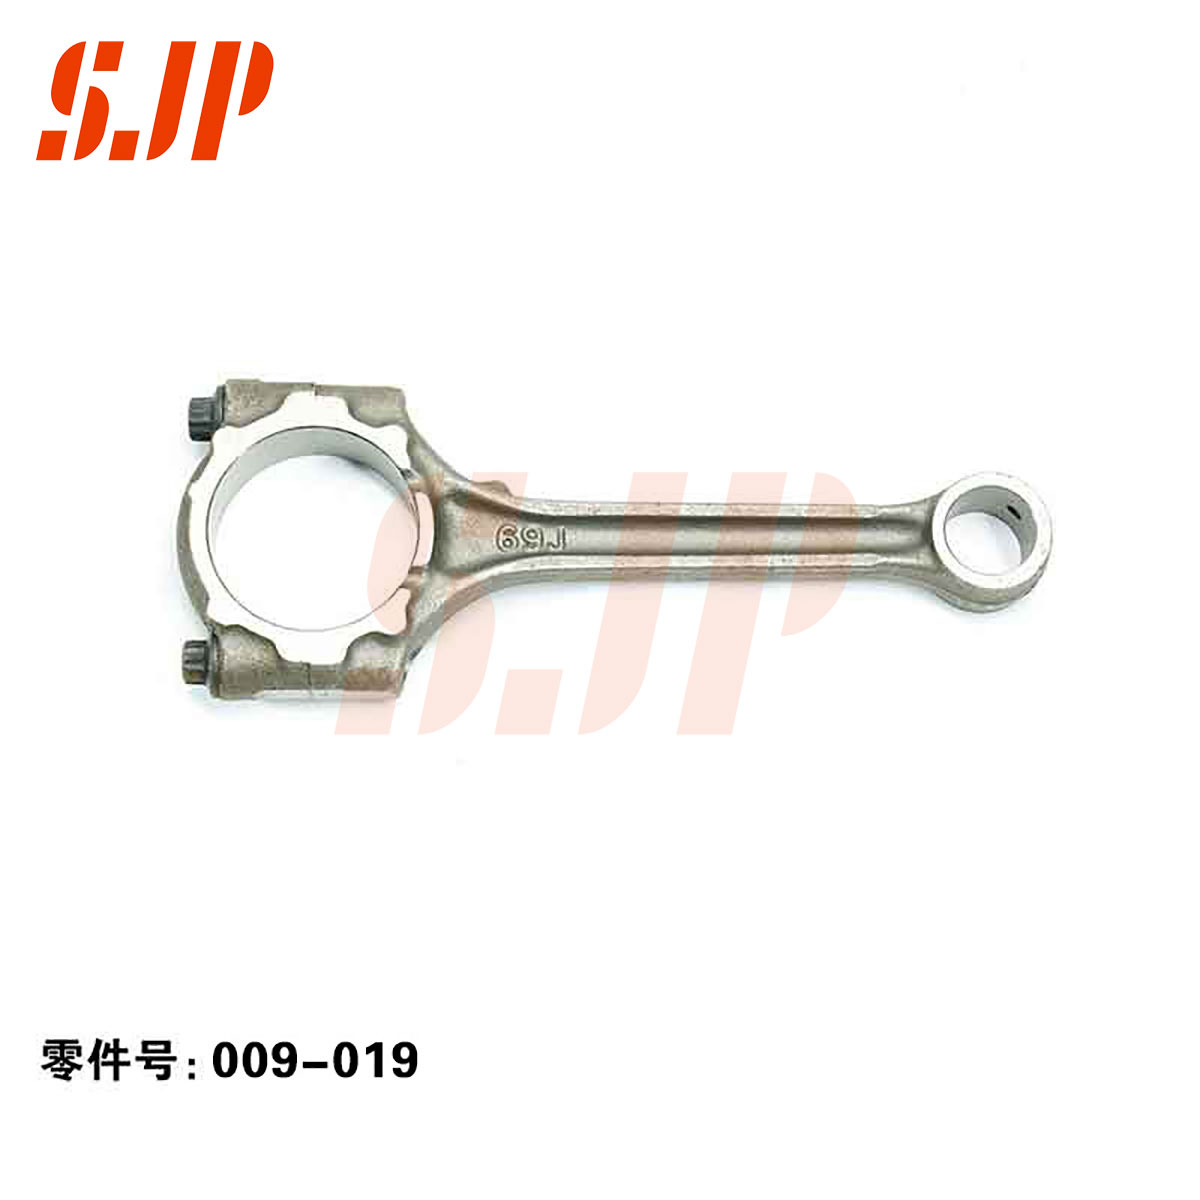 SJ-009-019 Connecting Rod For DK13/K14